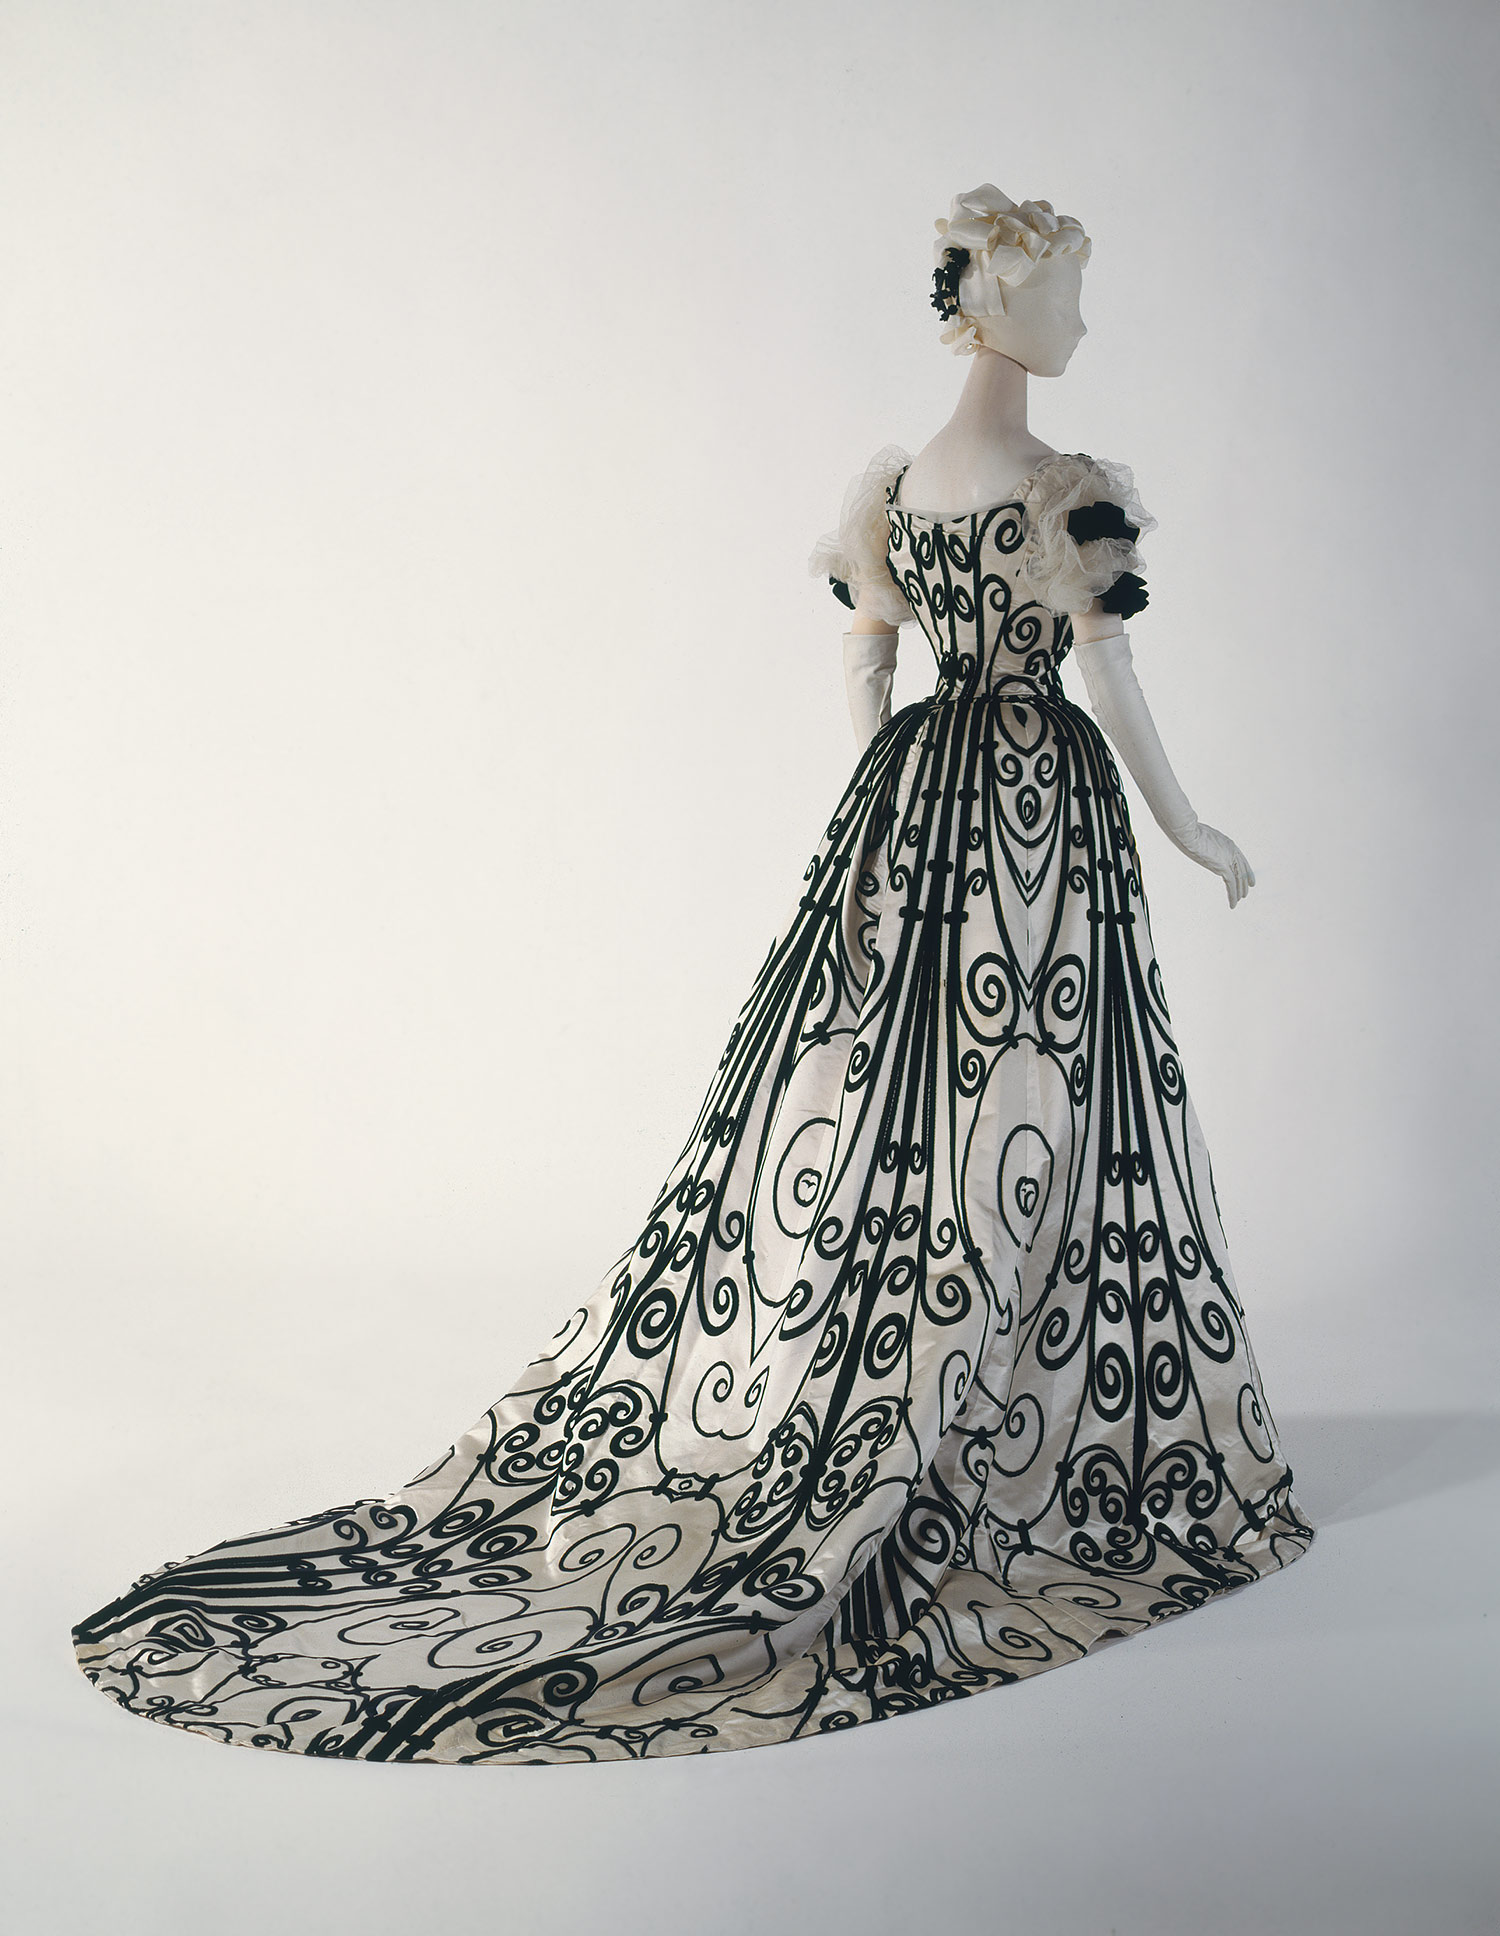 Dress Of 1900